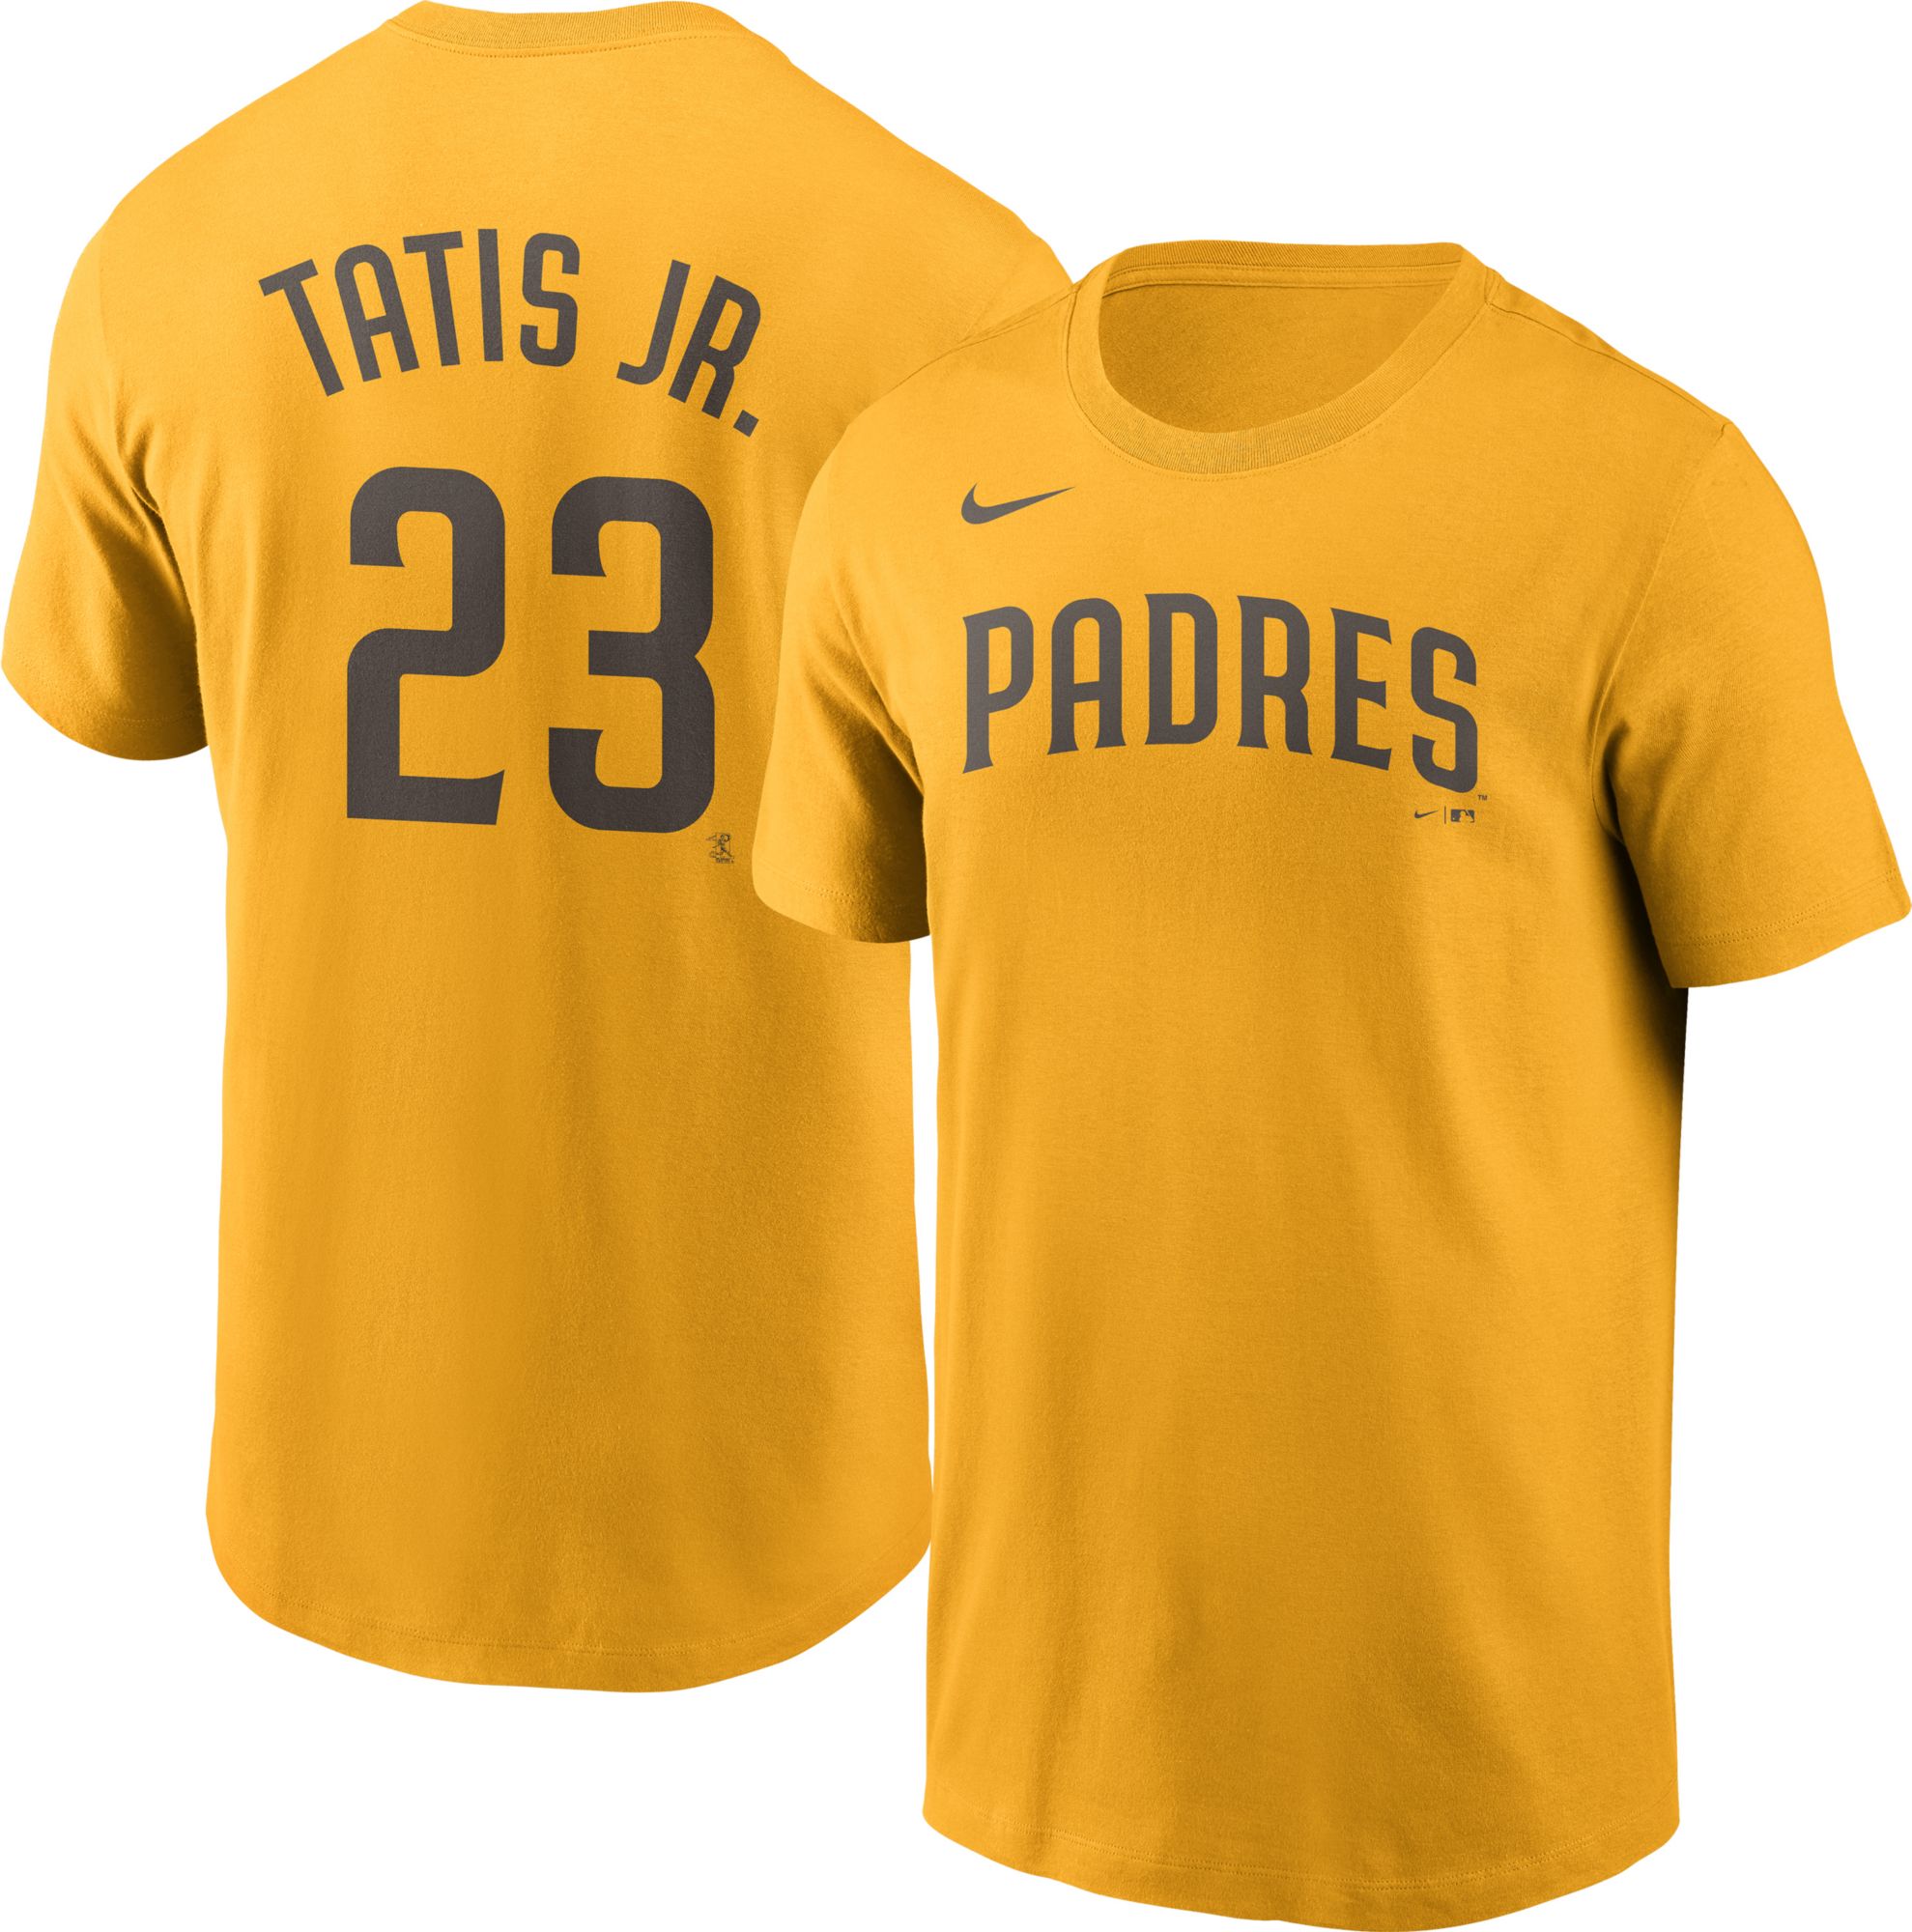 Men's Nike Fernando Tatís Jr. White/Brown San Diego Padres Home Authentic Player Jersey